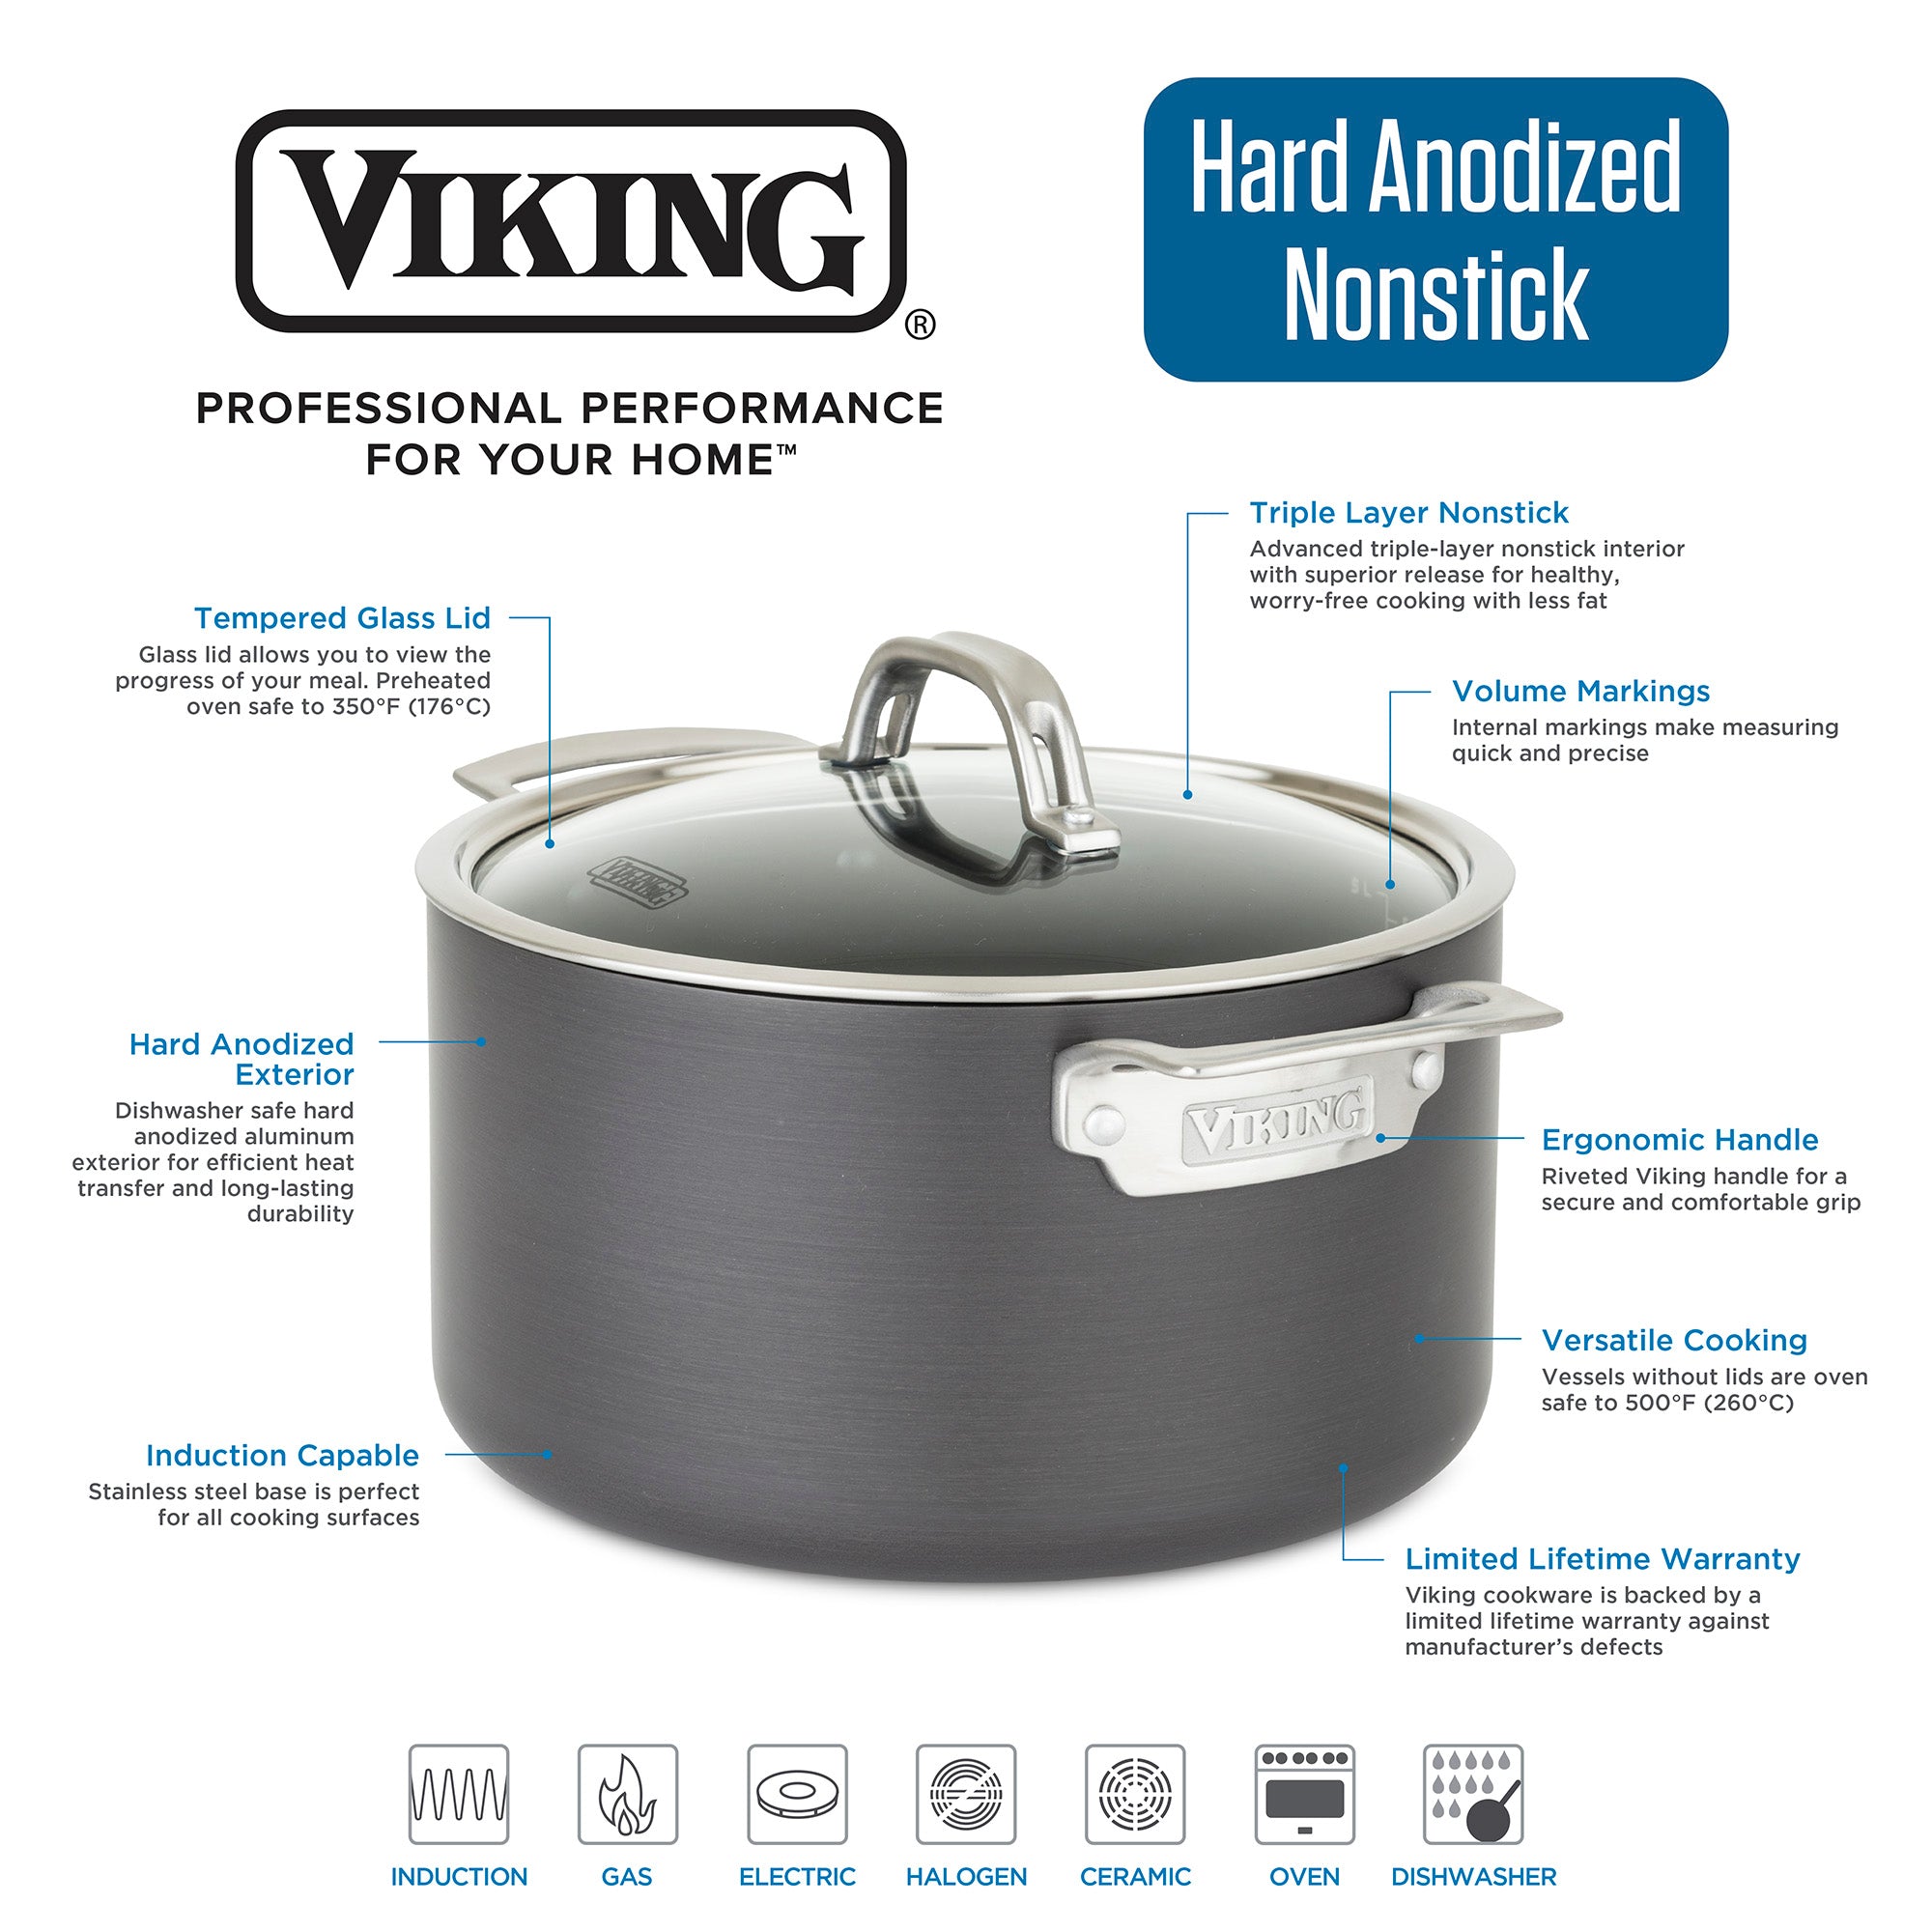 Viking Hard Anodized Nonstick 10-inch Fry Pan